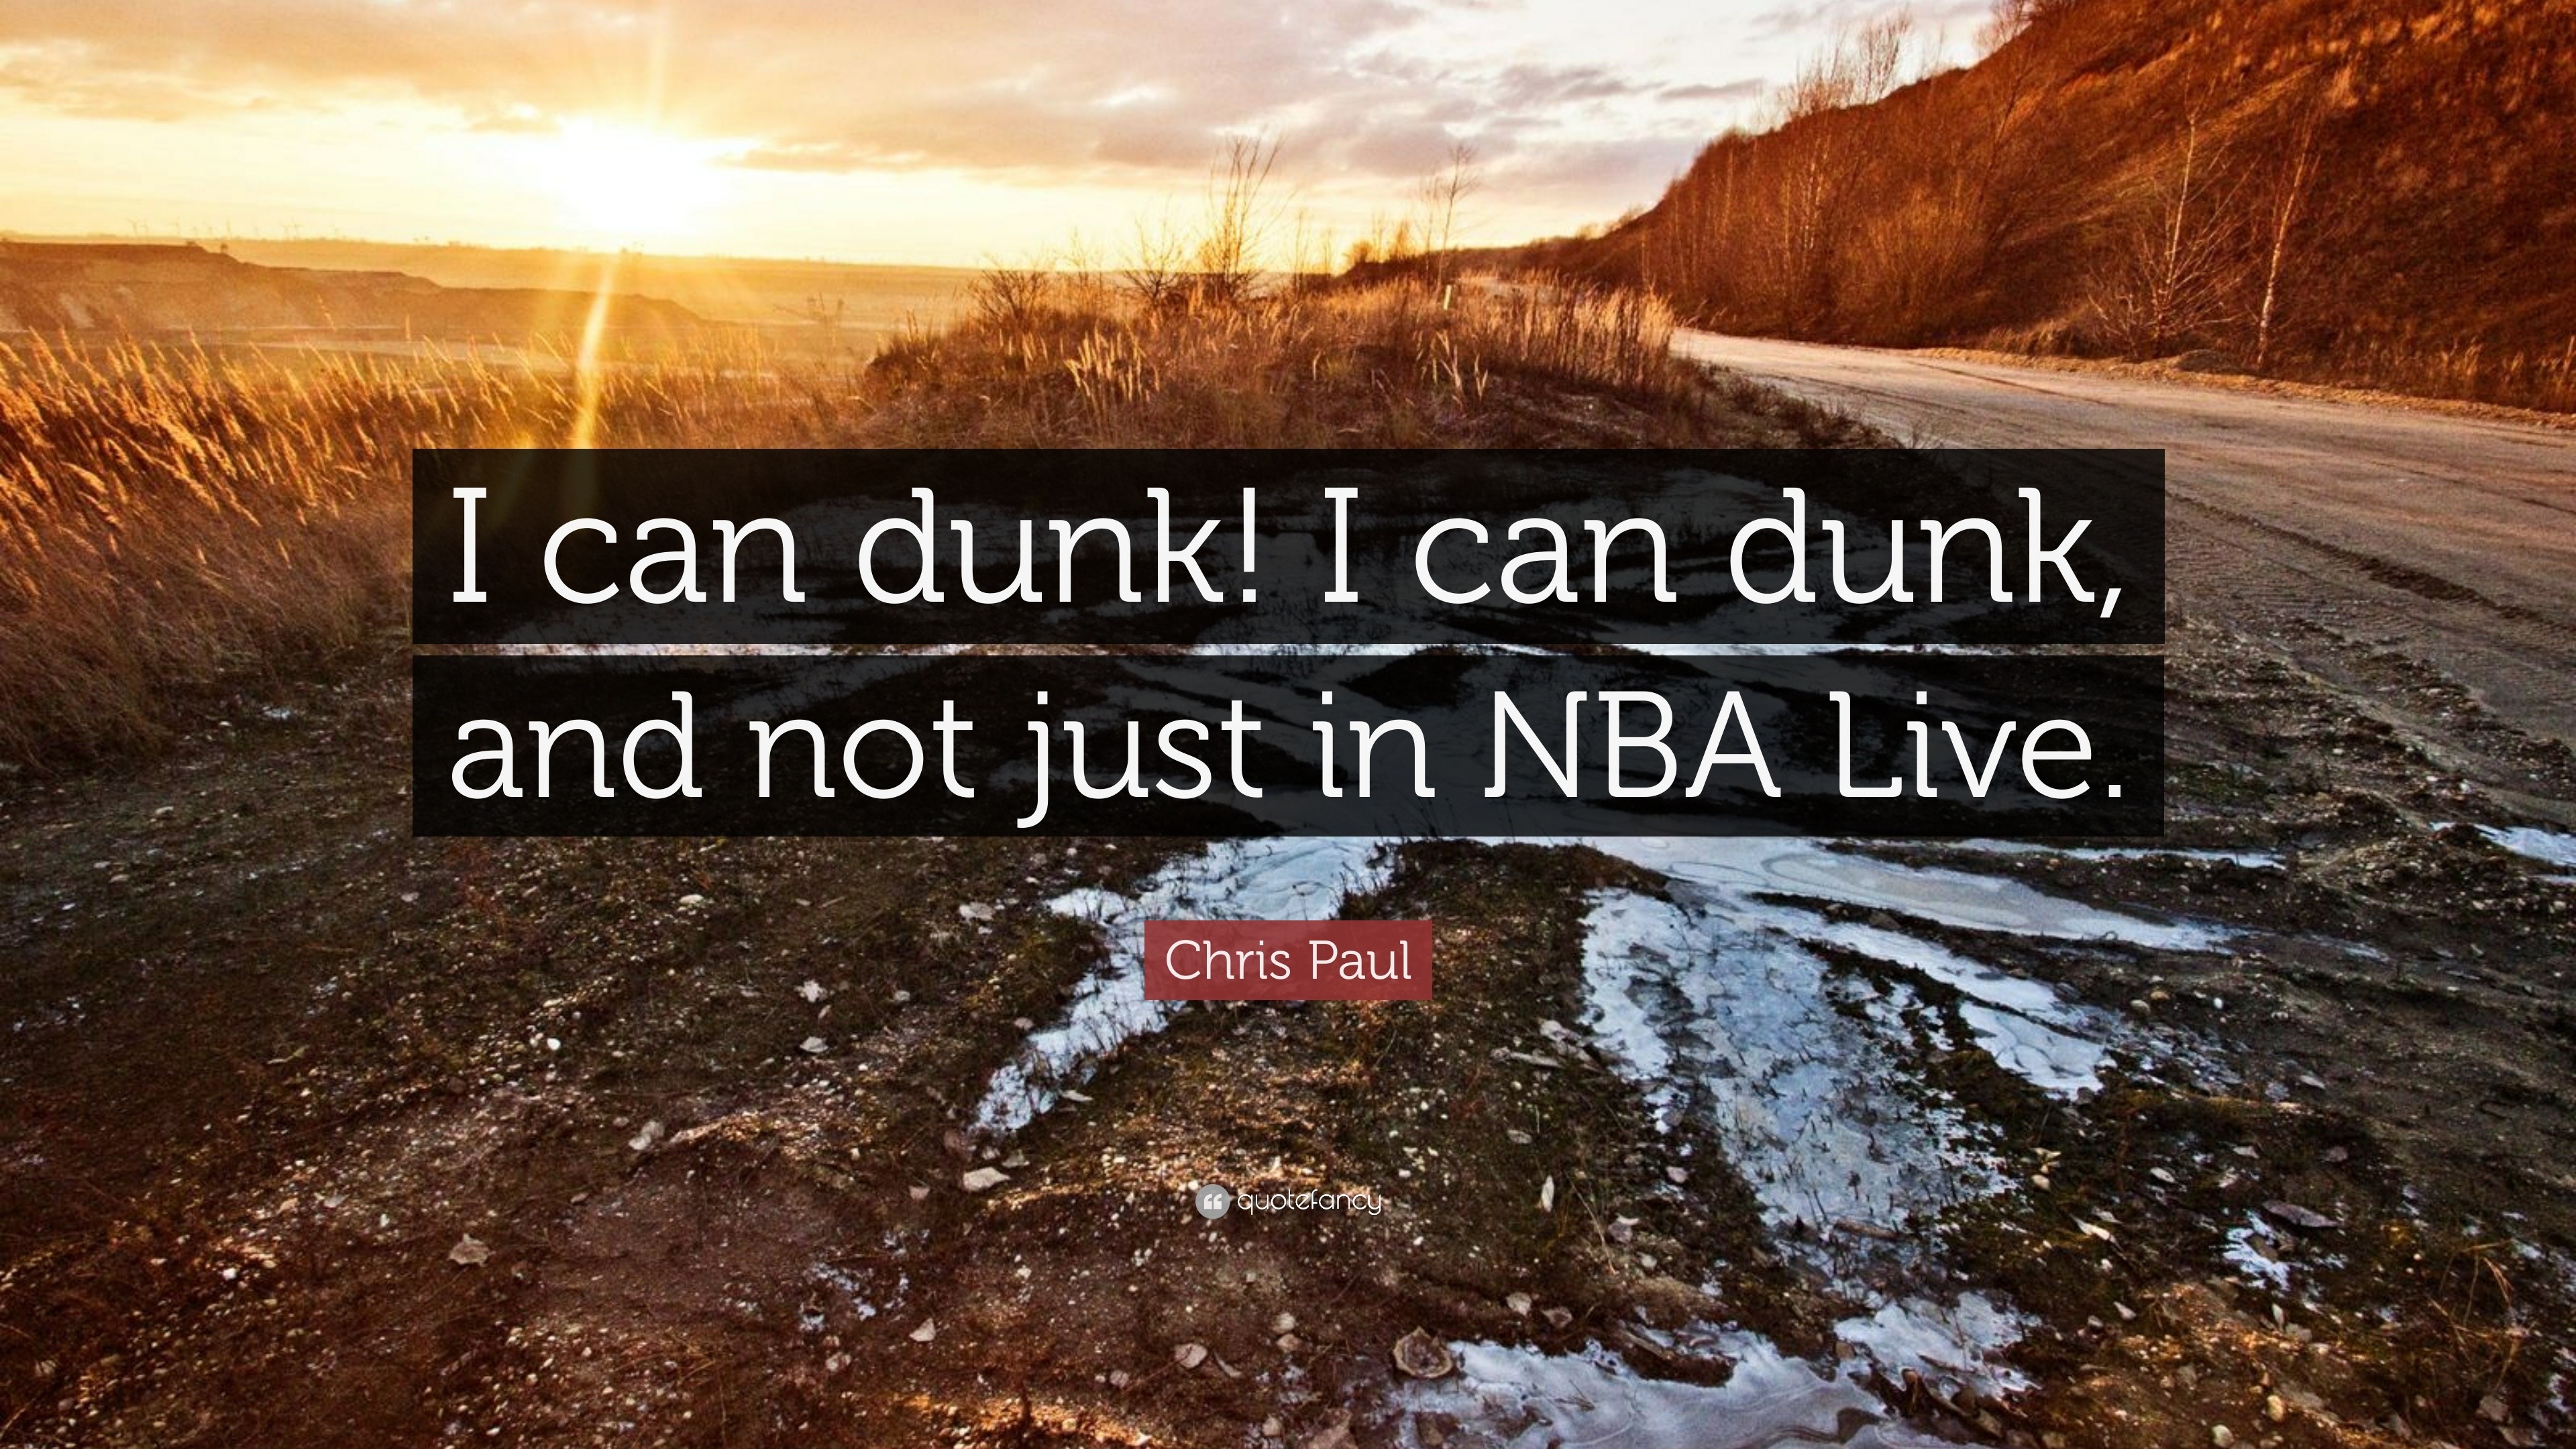 chris paul quotes basketball